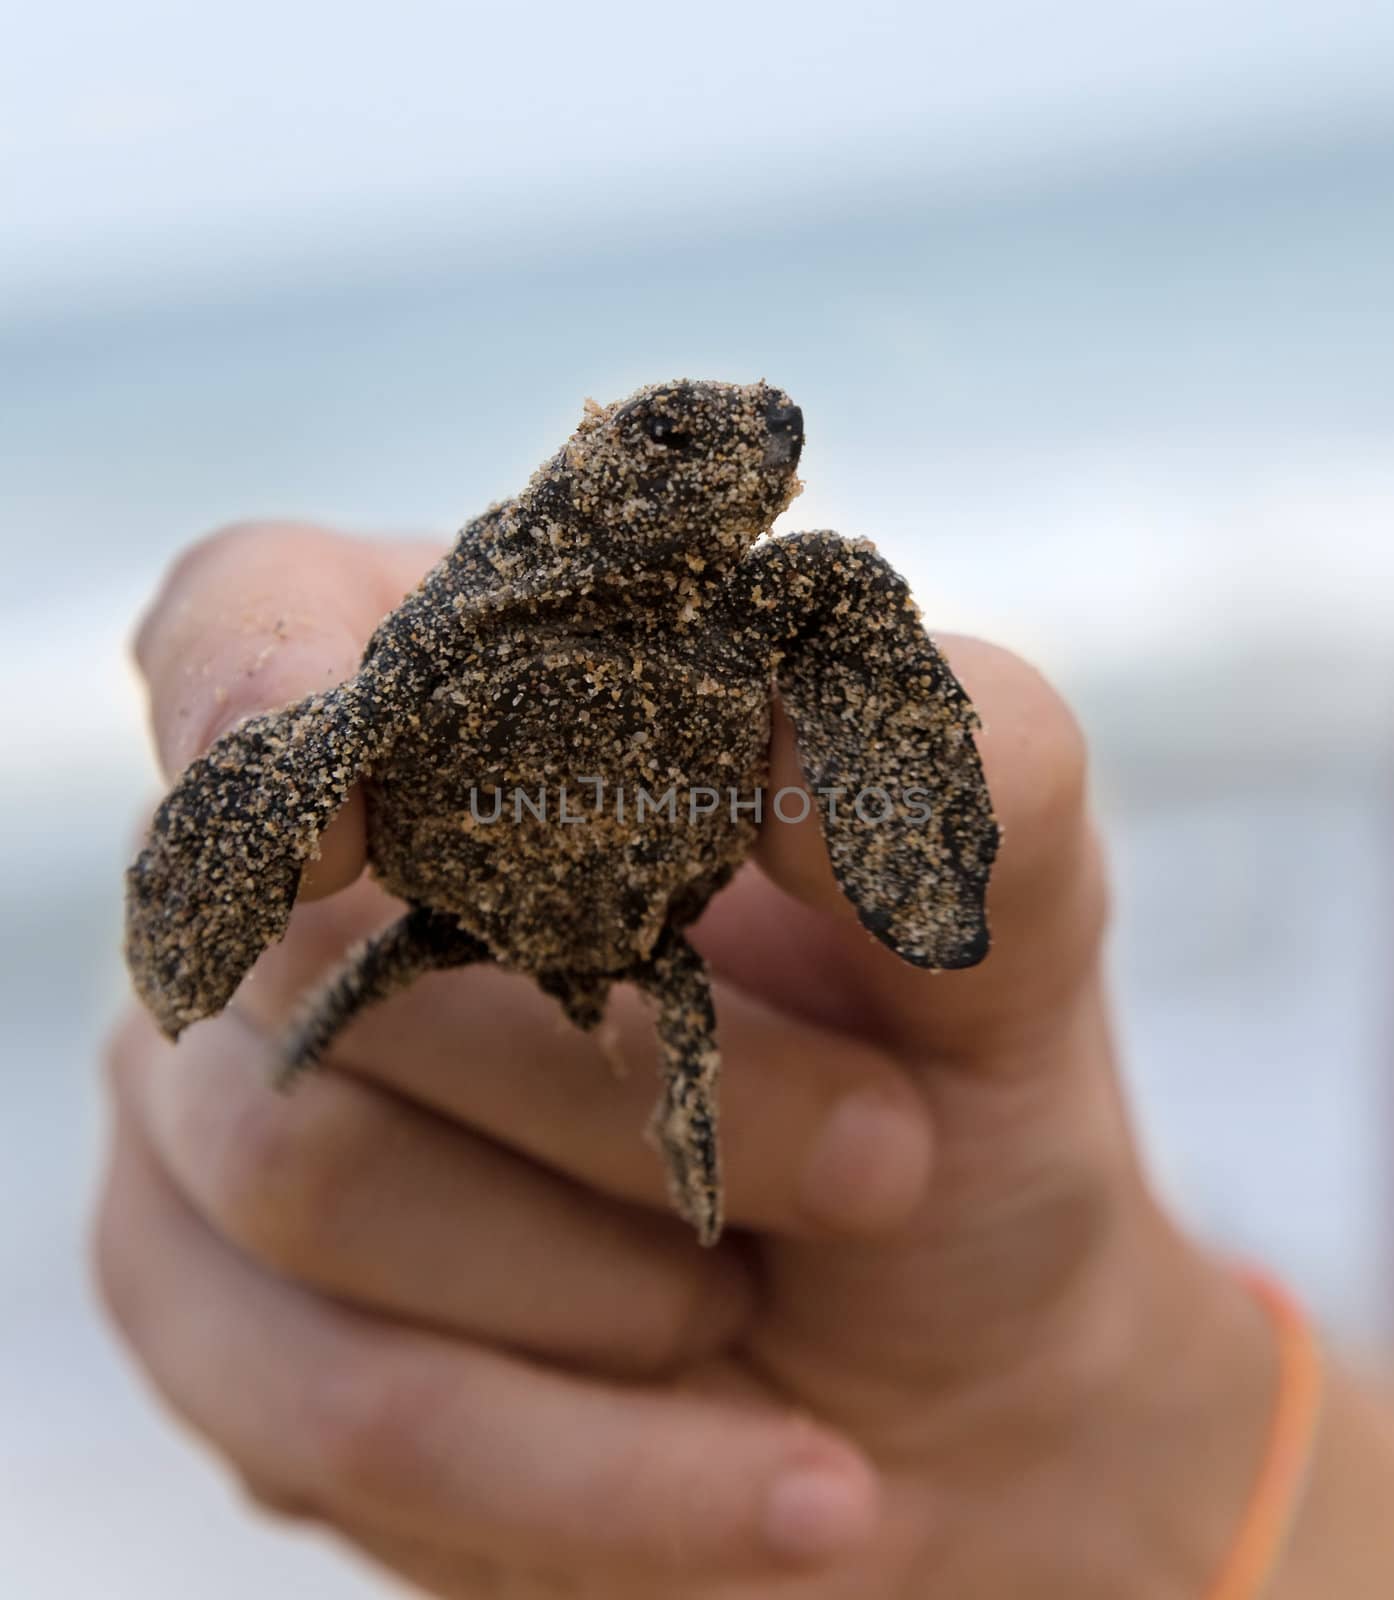 Loggerhead Turtle baby(Caretta carretta) in hand by foryouinf